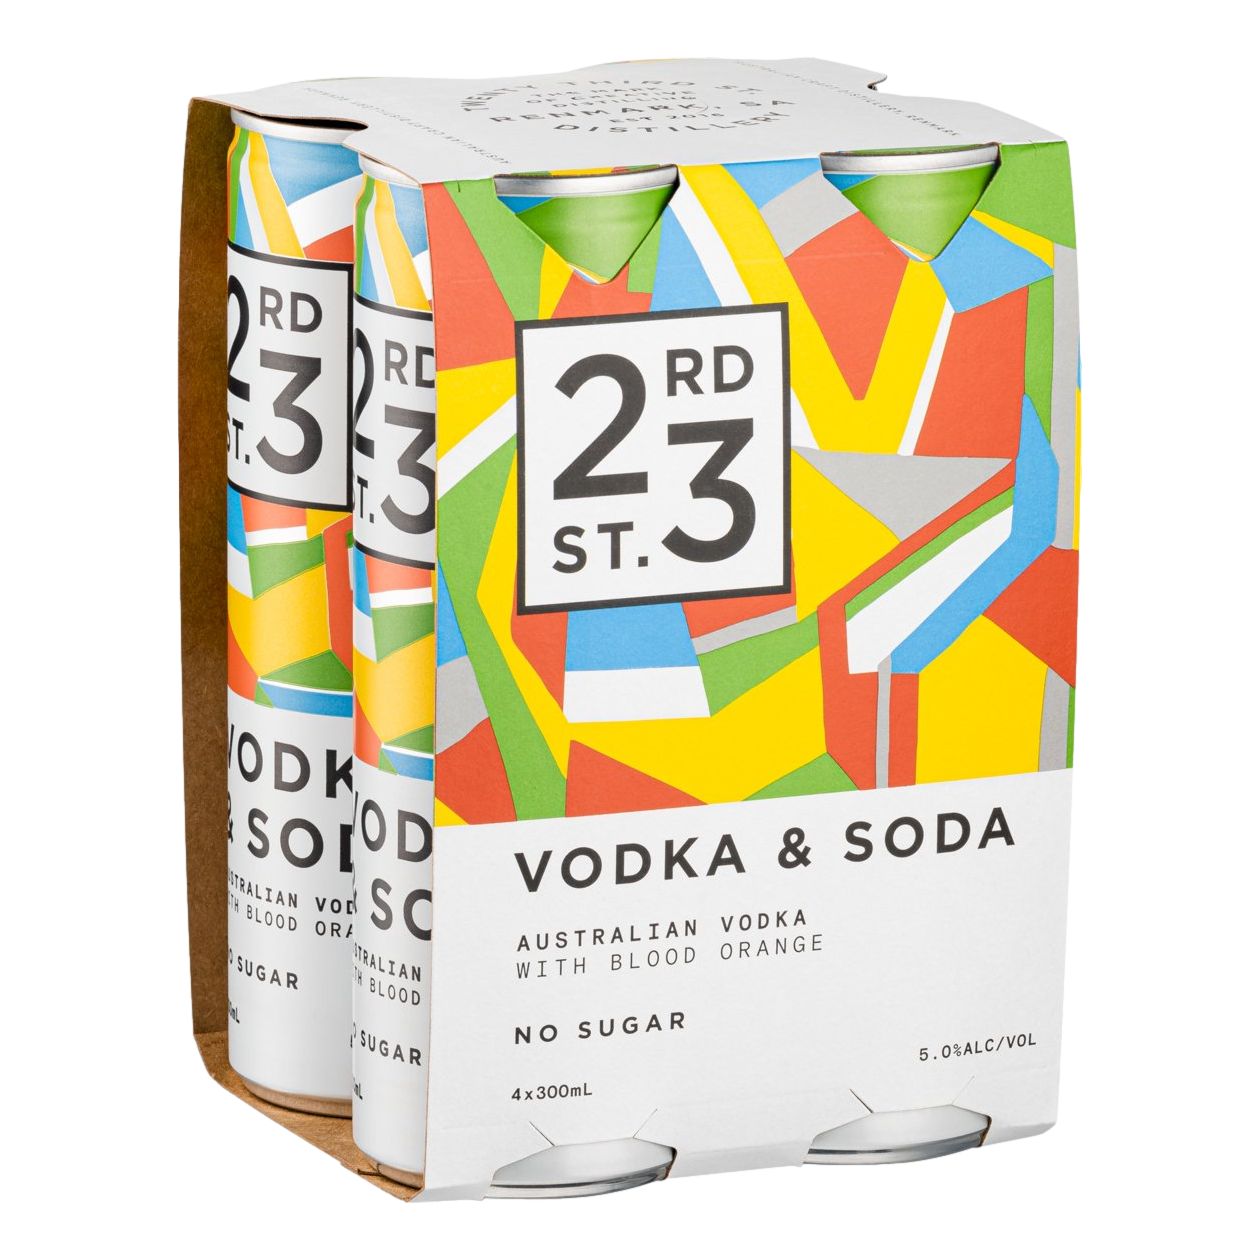 23rd Street Vodka & Blood Orange 300ml Can 4 Pack